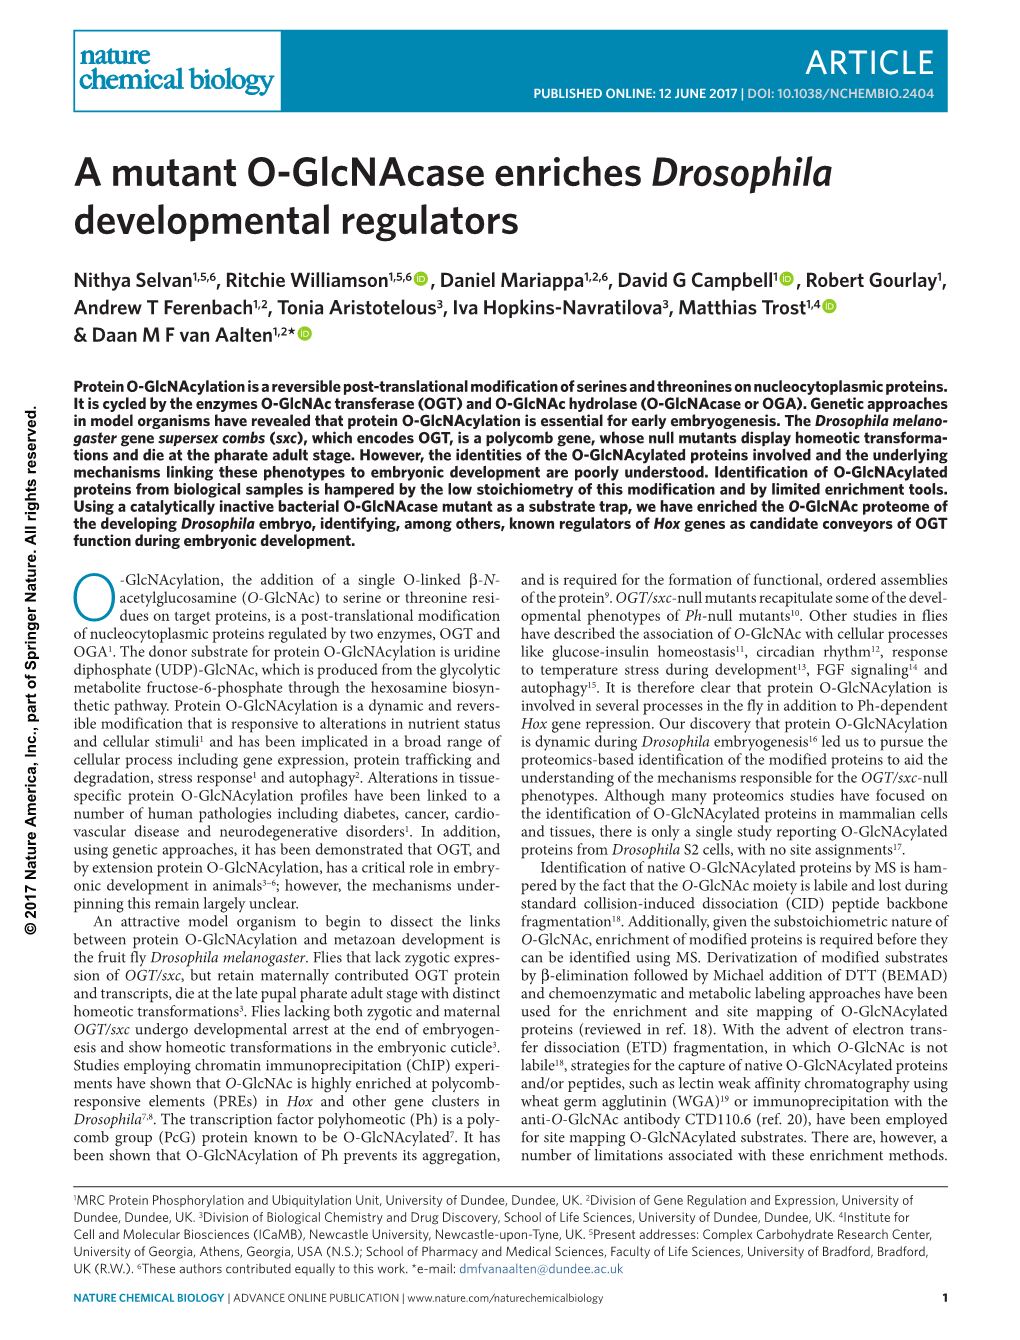 A Mutant O-Glcnacase Enriches Drosophila Developmental Regulators